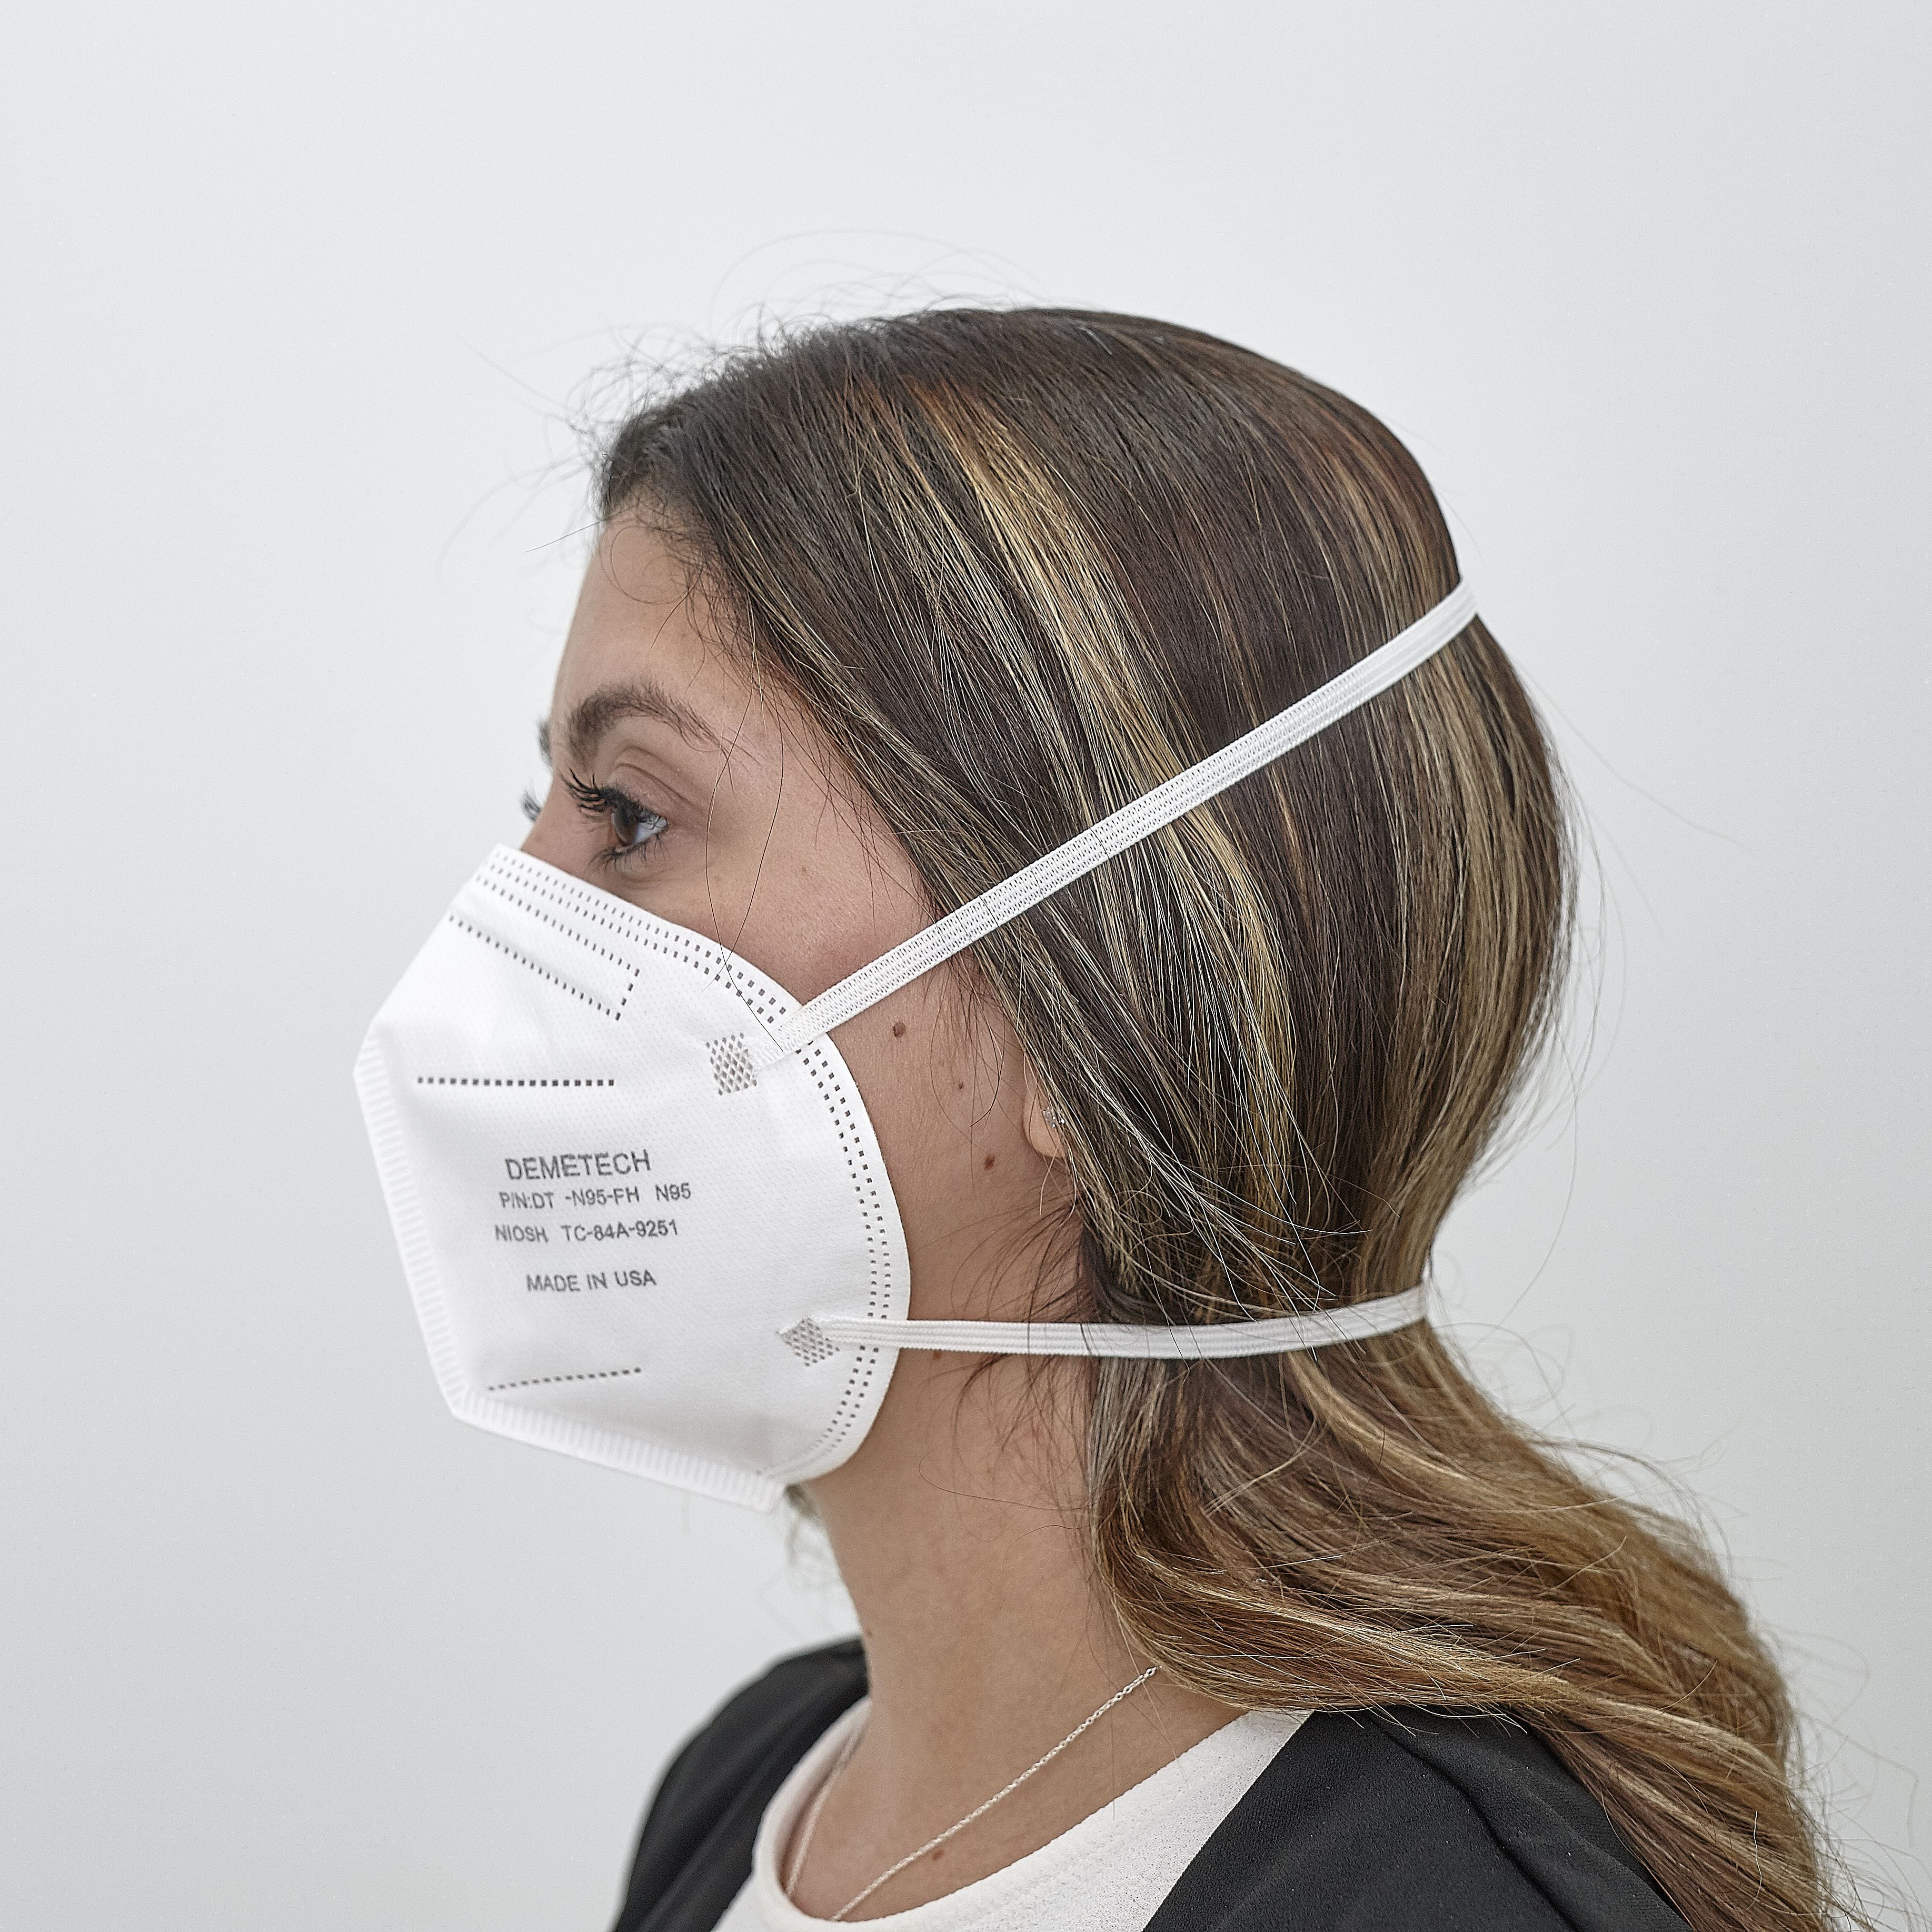 N95 Respirator Mask, Fold Style, NIOSH APPROVED, (Box of 20 ), Size: Regular